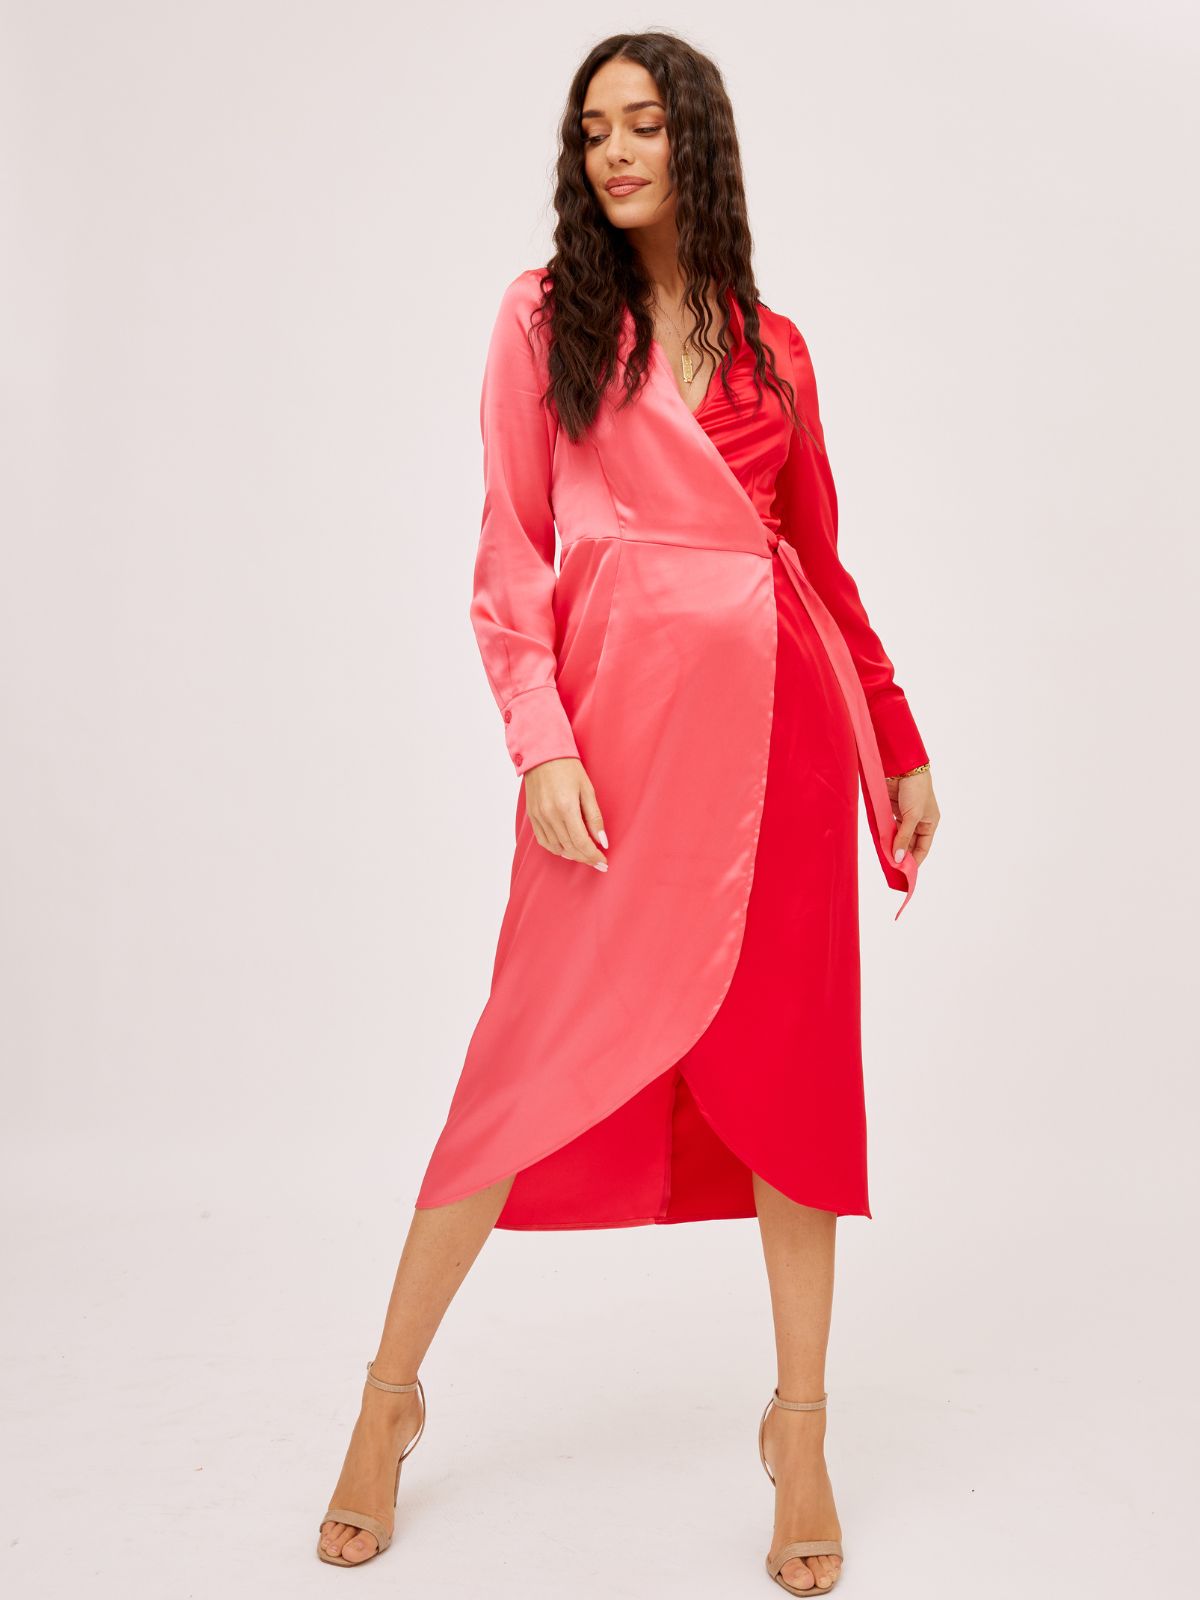 Jem Colourblock Wrap Dress in Pink & Red